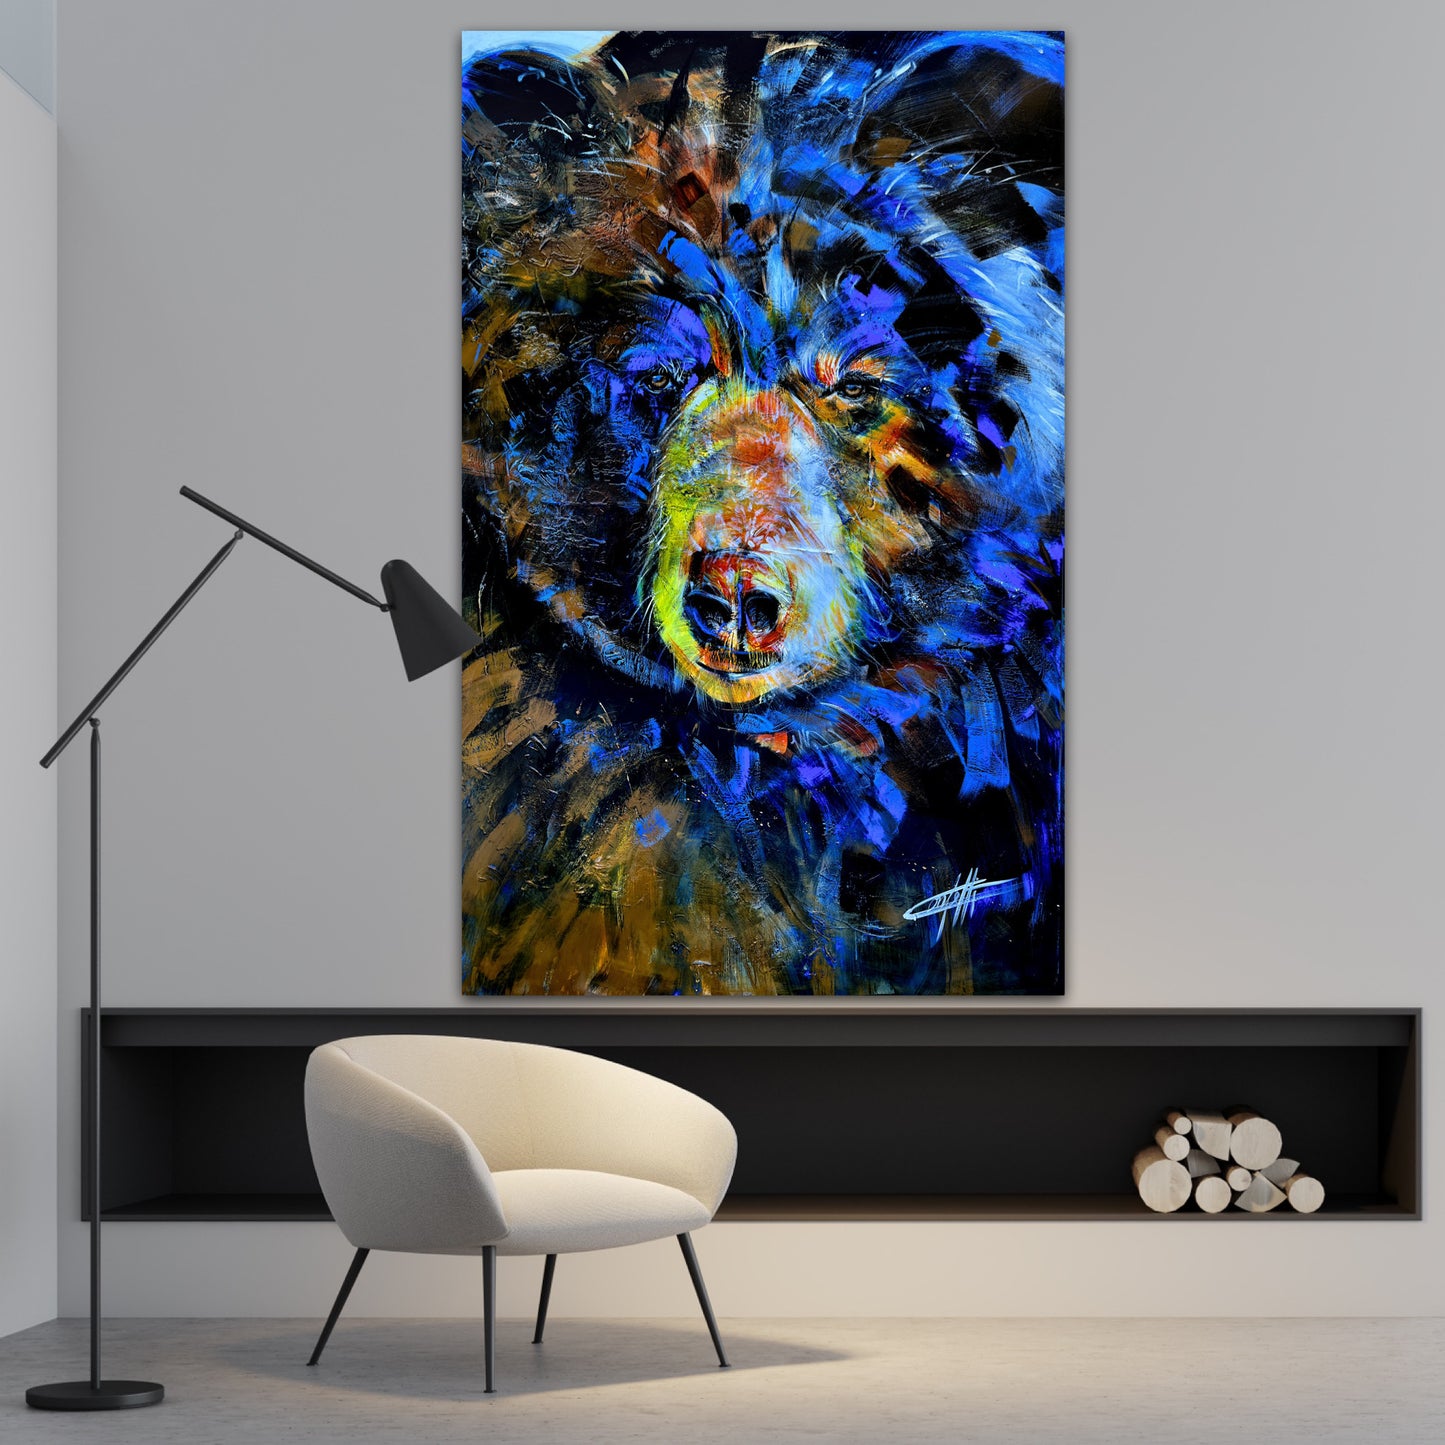 Simon the bear / artwork by confetti artist, colorful blue and orange bear, passionate